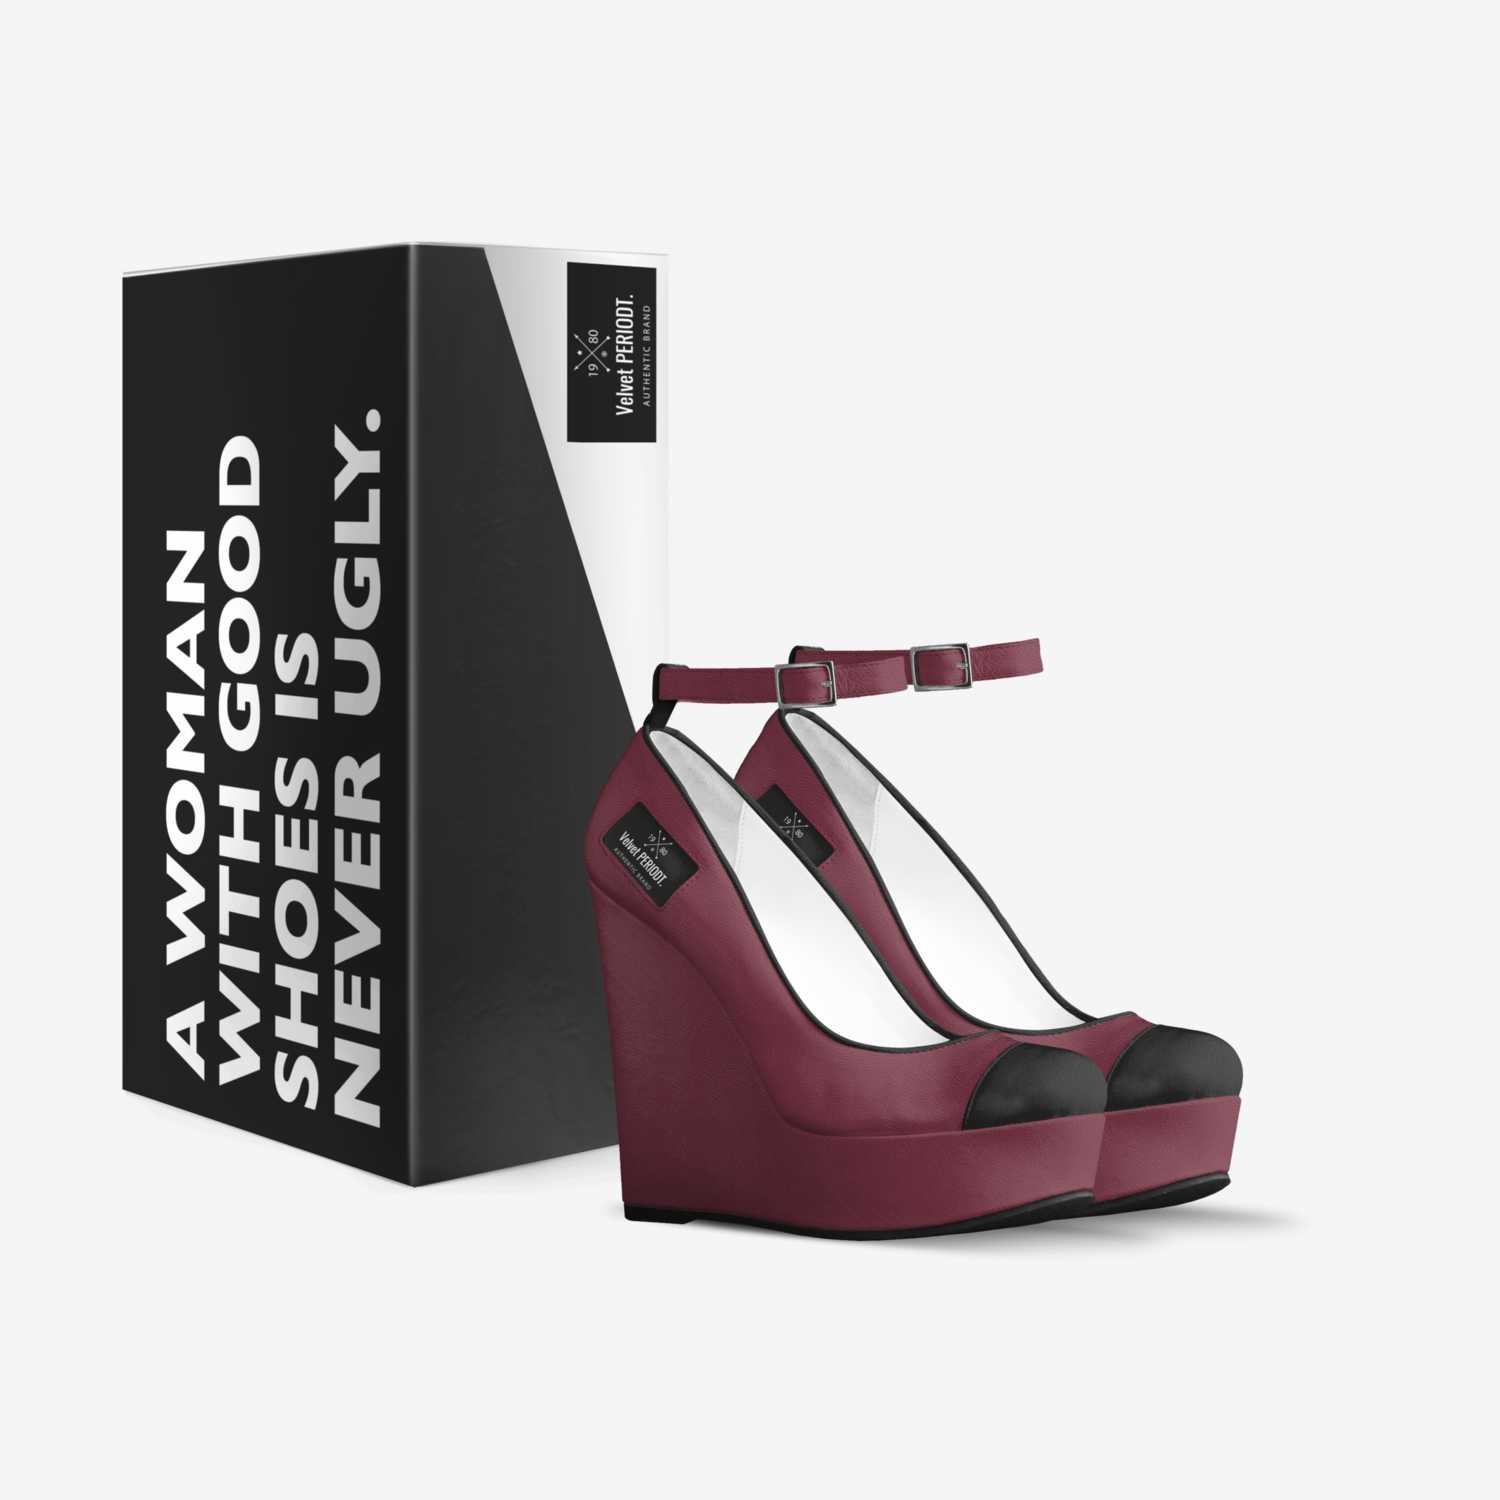 Velvet PERIODT. custom made in Italy shoes by Shantae Esannason | Box view